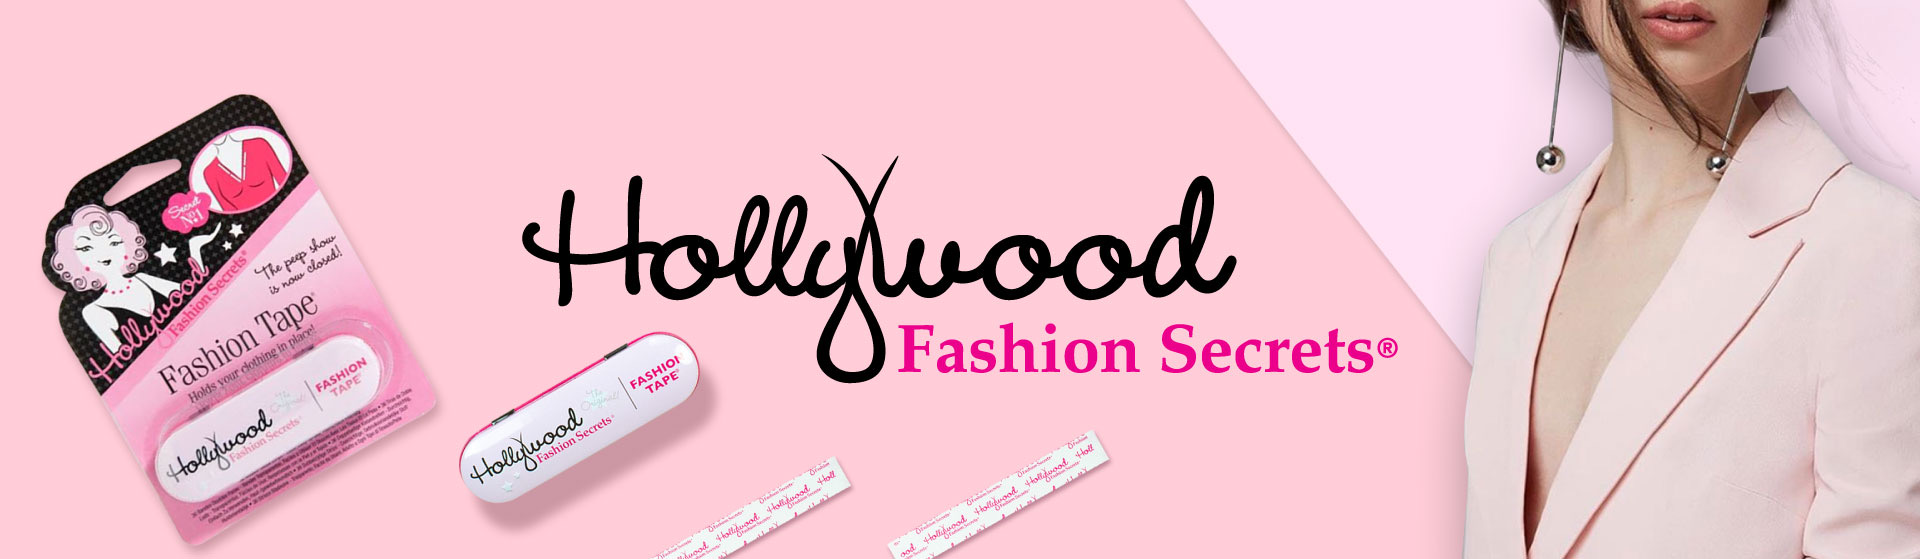 Hollywood Fashion Secrets Fashion Tape Tin 36ชิ้น/กล่อง เทปติดเสื้อ เทปกันโป๊ เพิ่มความมั่นใจ สามารถติดได้ทั้งผิวและผ้าโดยไม่ระคายเคือง กาวสองหน้าคุณภาพพรีเมี่ยมเกรดการแพทย์⁣